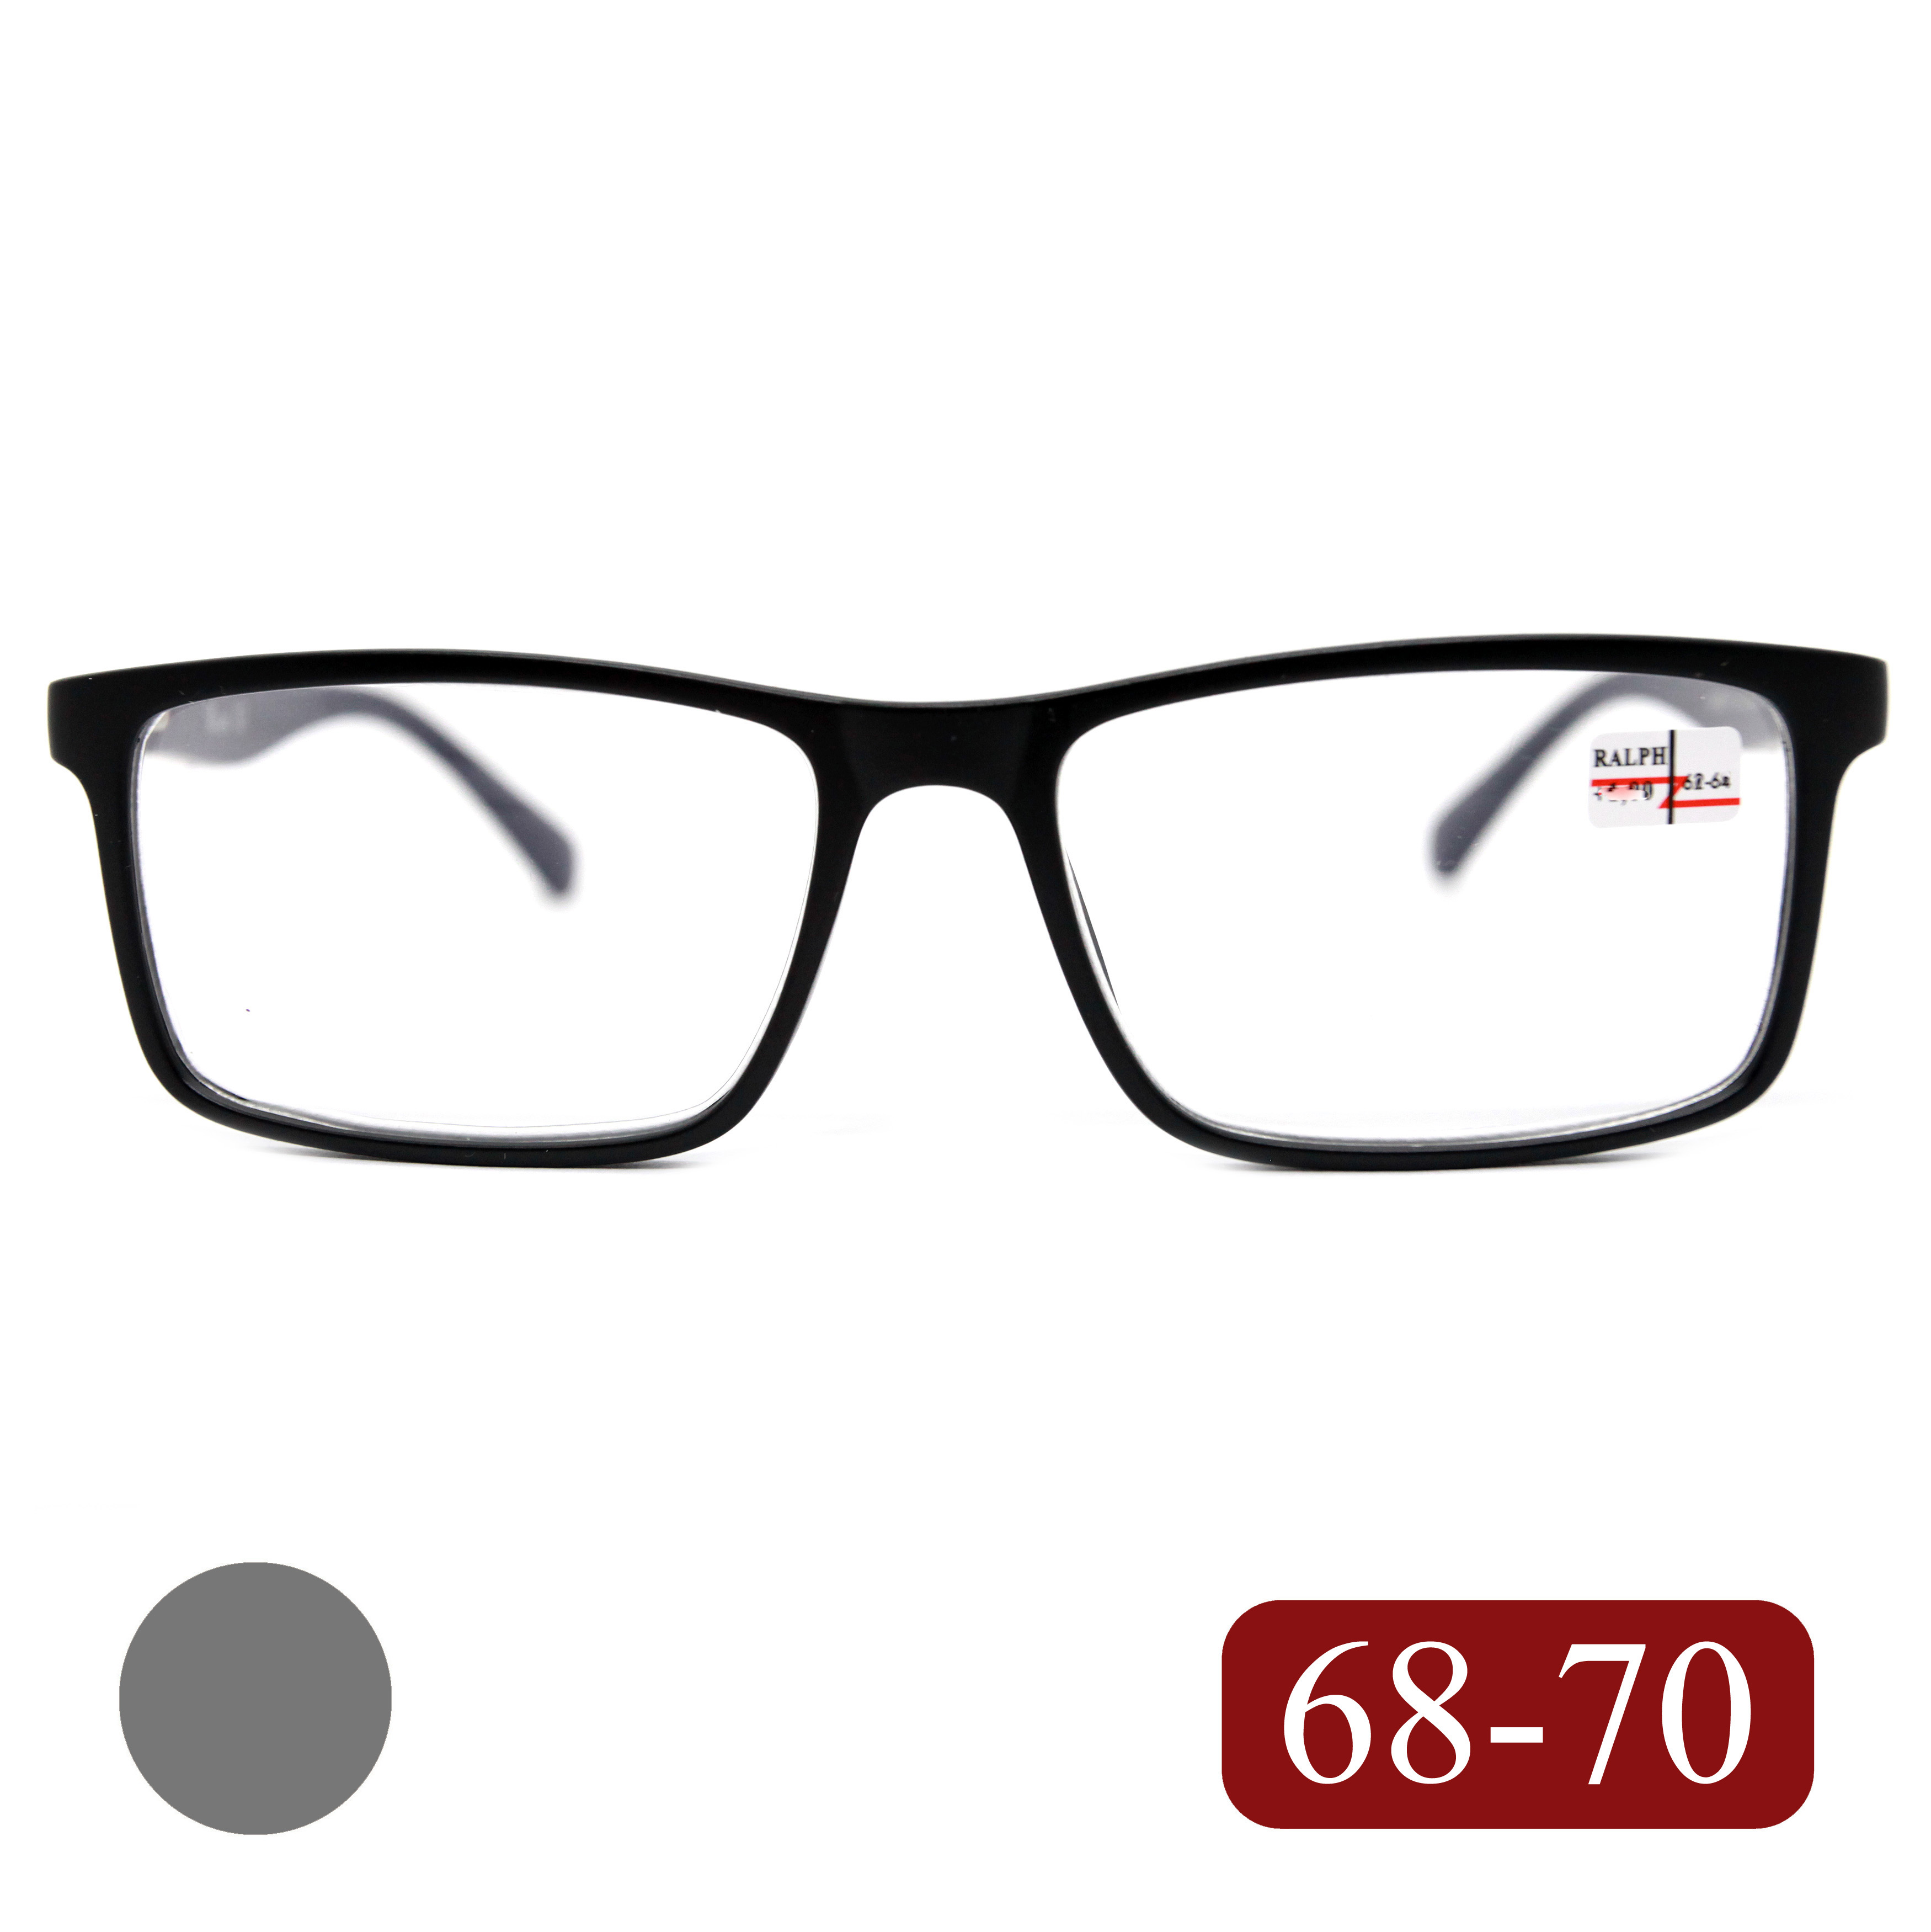 Готовые очки RALPH 0682 +4,50, без футляра, черно-серый, РЦ 68-70